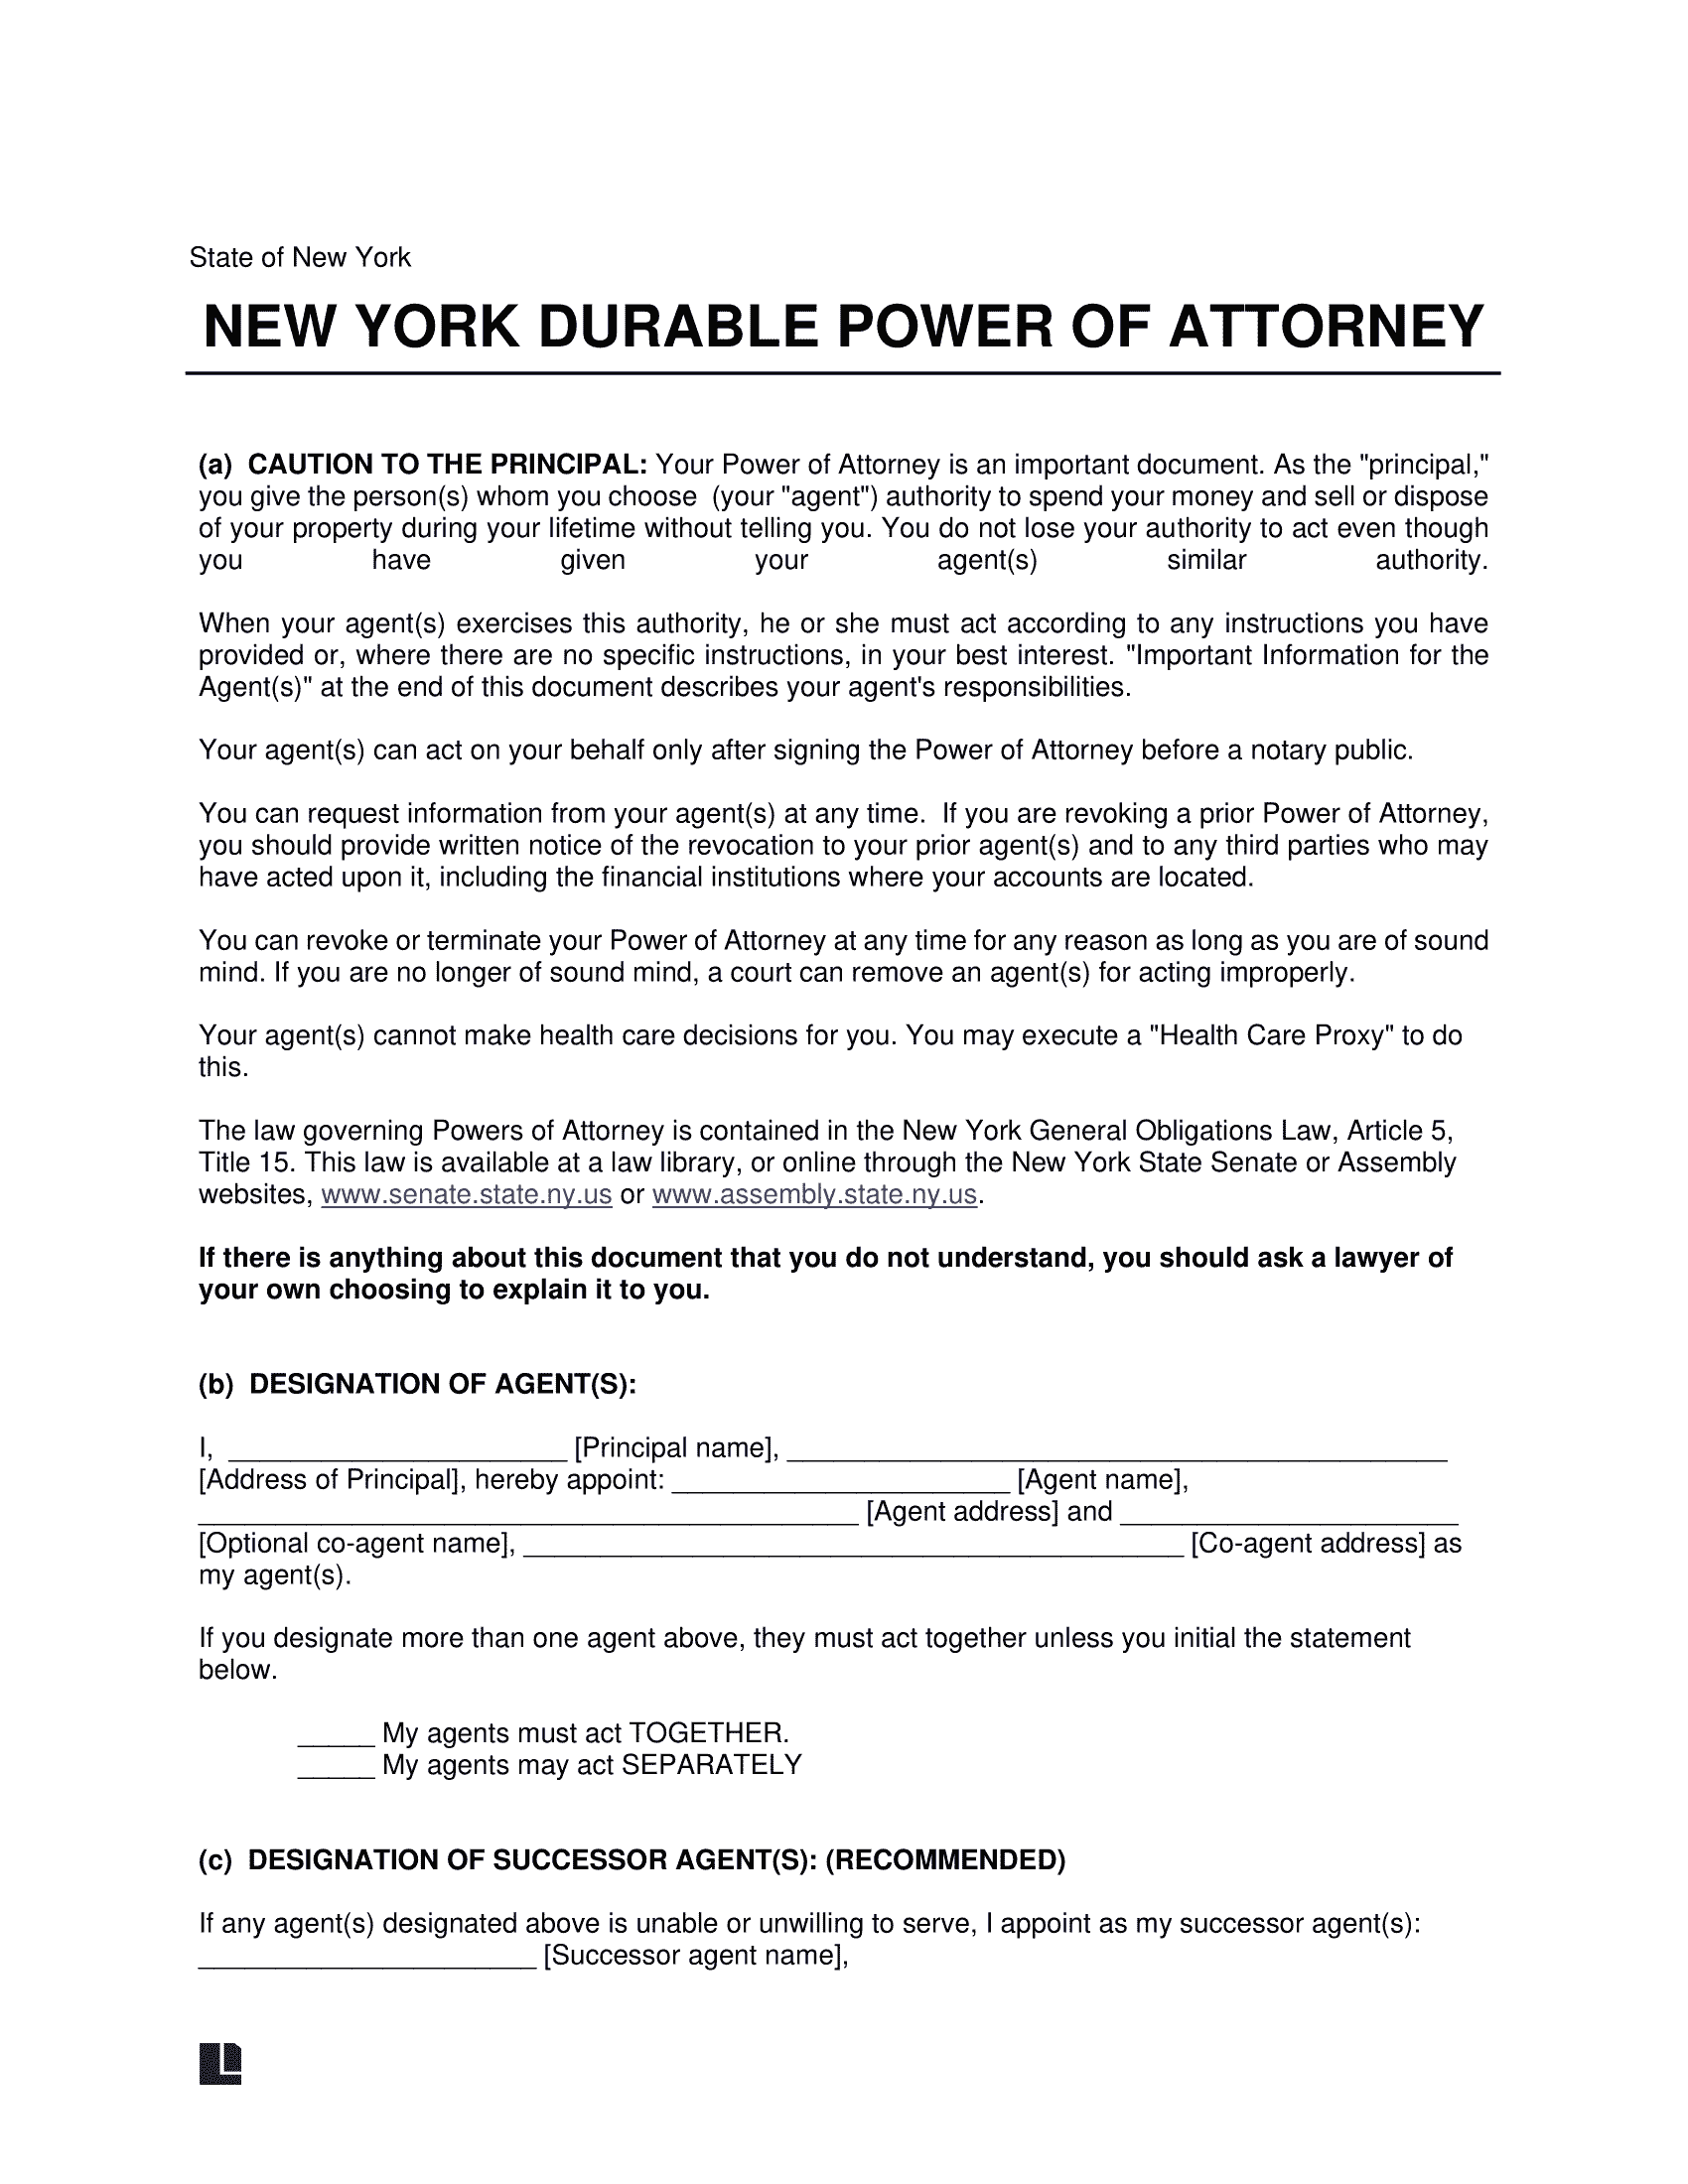 New York Durable Statutory Power of Attorney Form